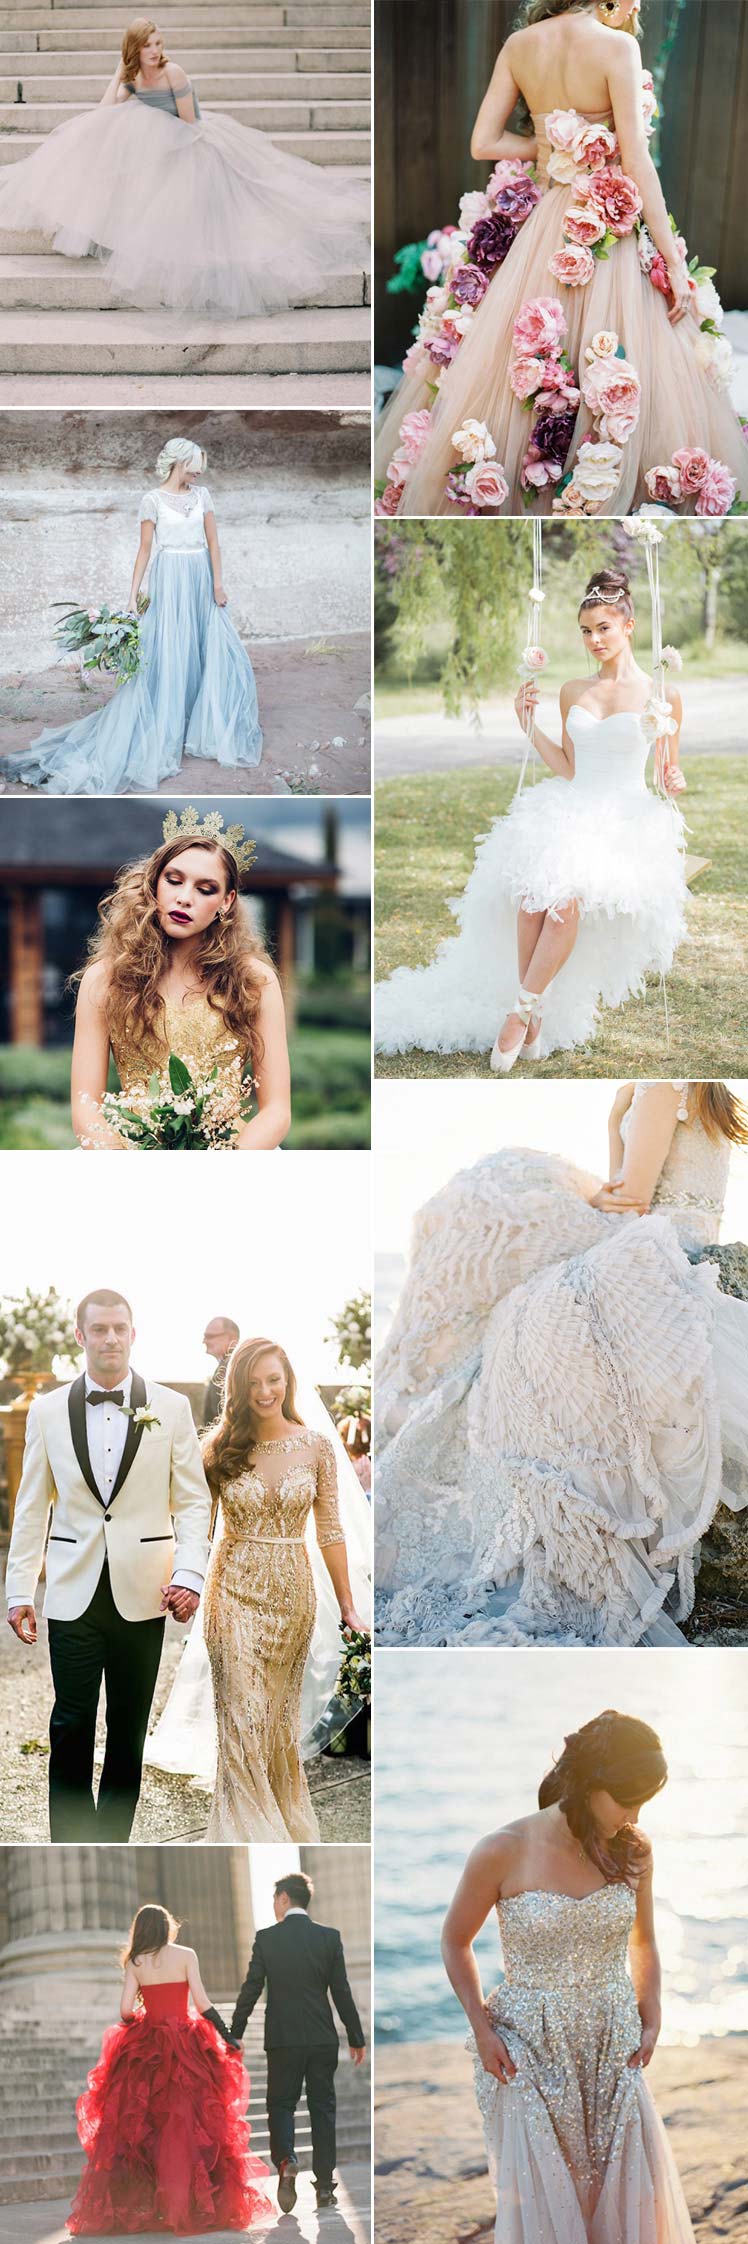 Stunning and dramatic grande wedding dress ideas